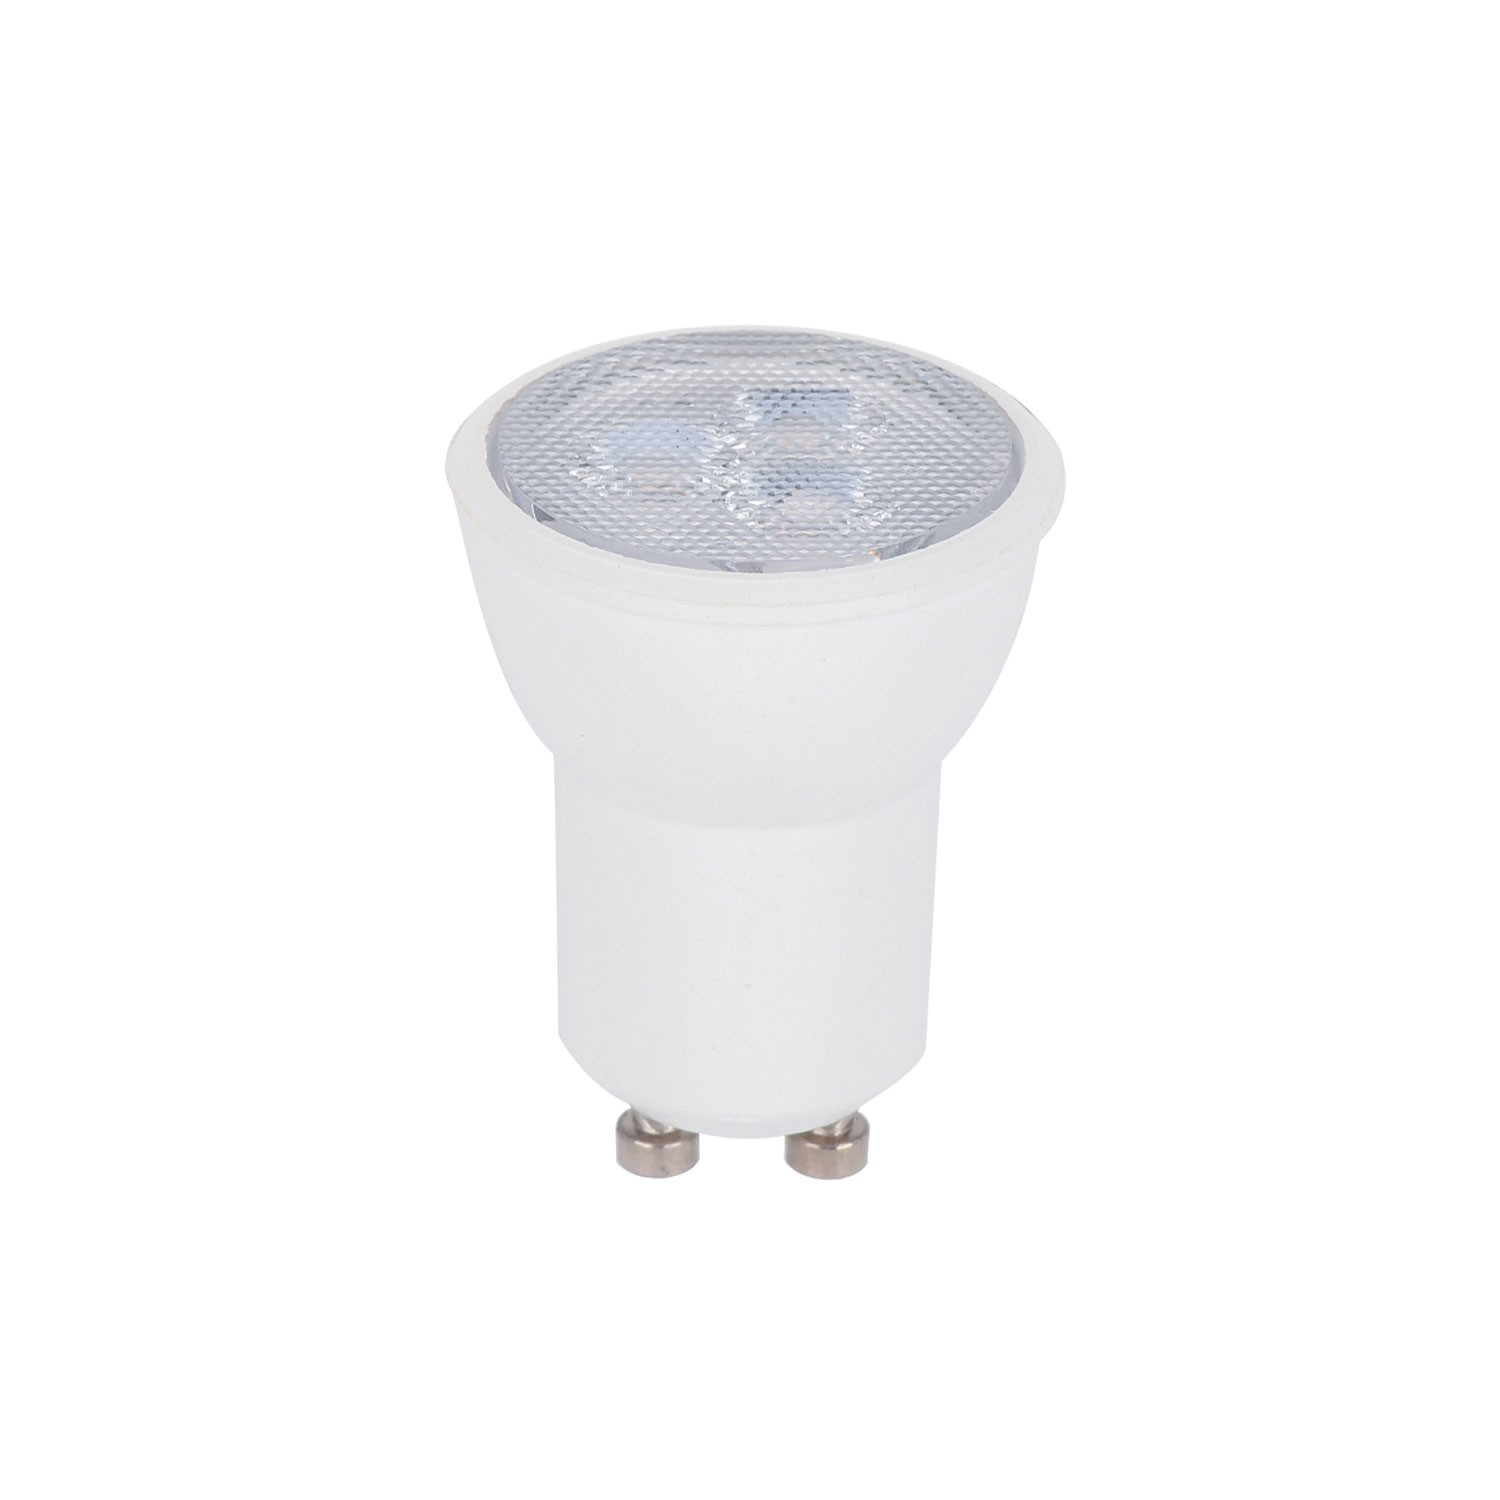 Spostaluce Lamp adjustable Flex 30 with GU1d0 spotlight and two-pin plug